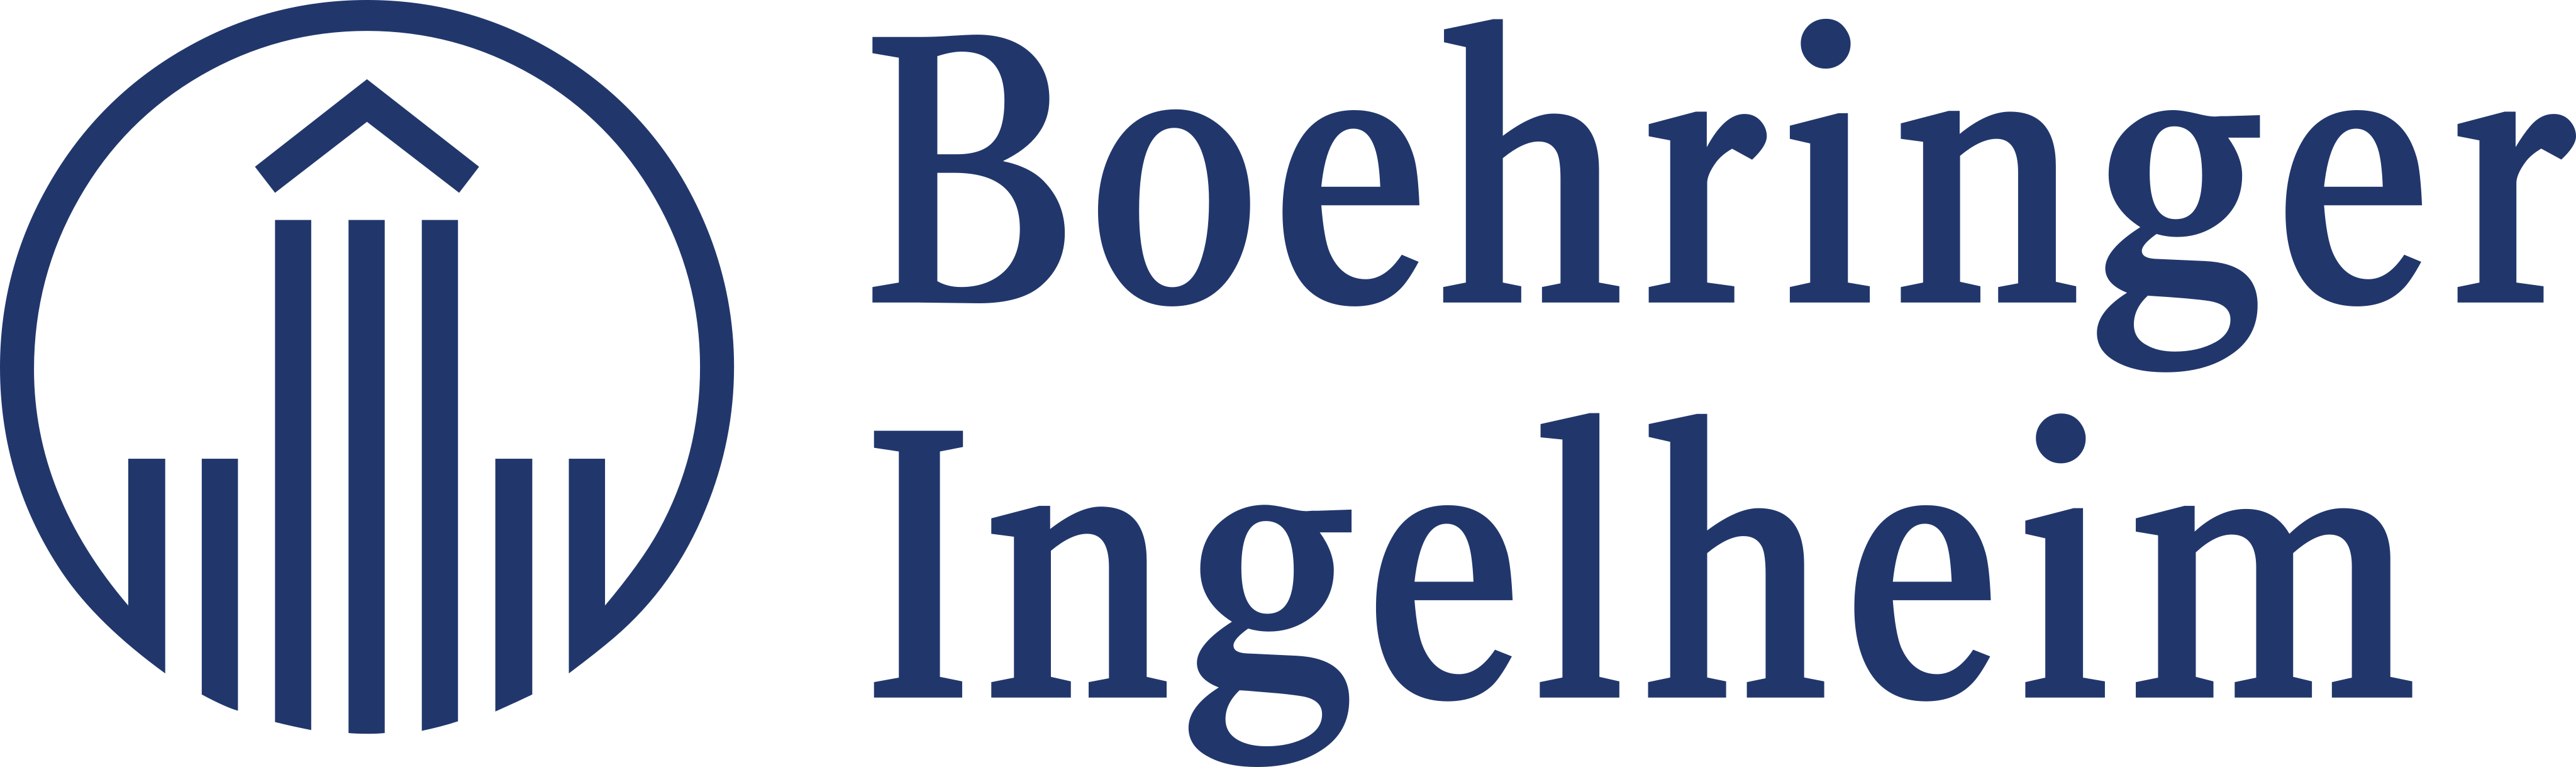 boehringer ingelheim logo - Boehringer Ingelheim Logo